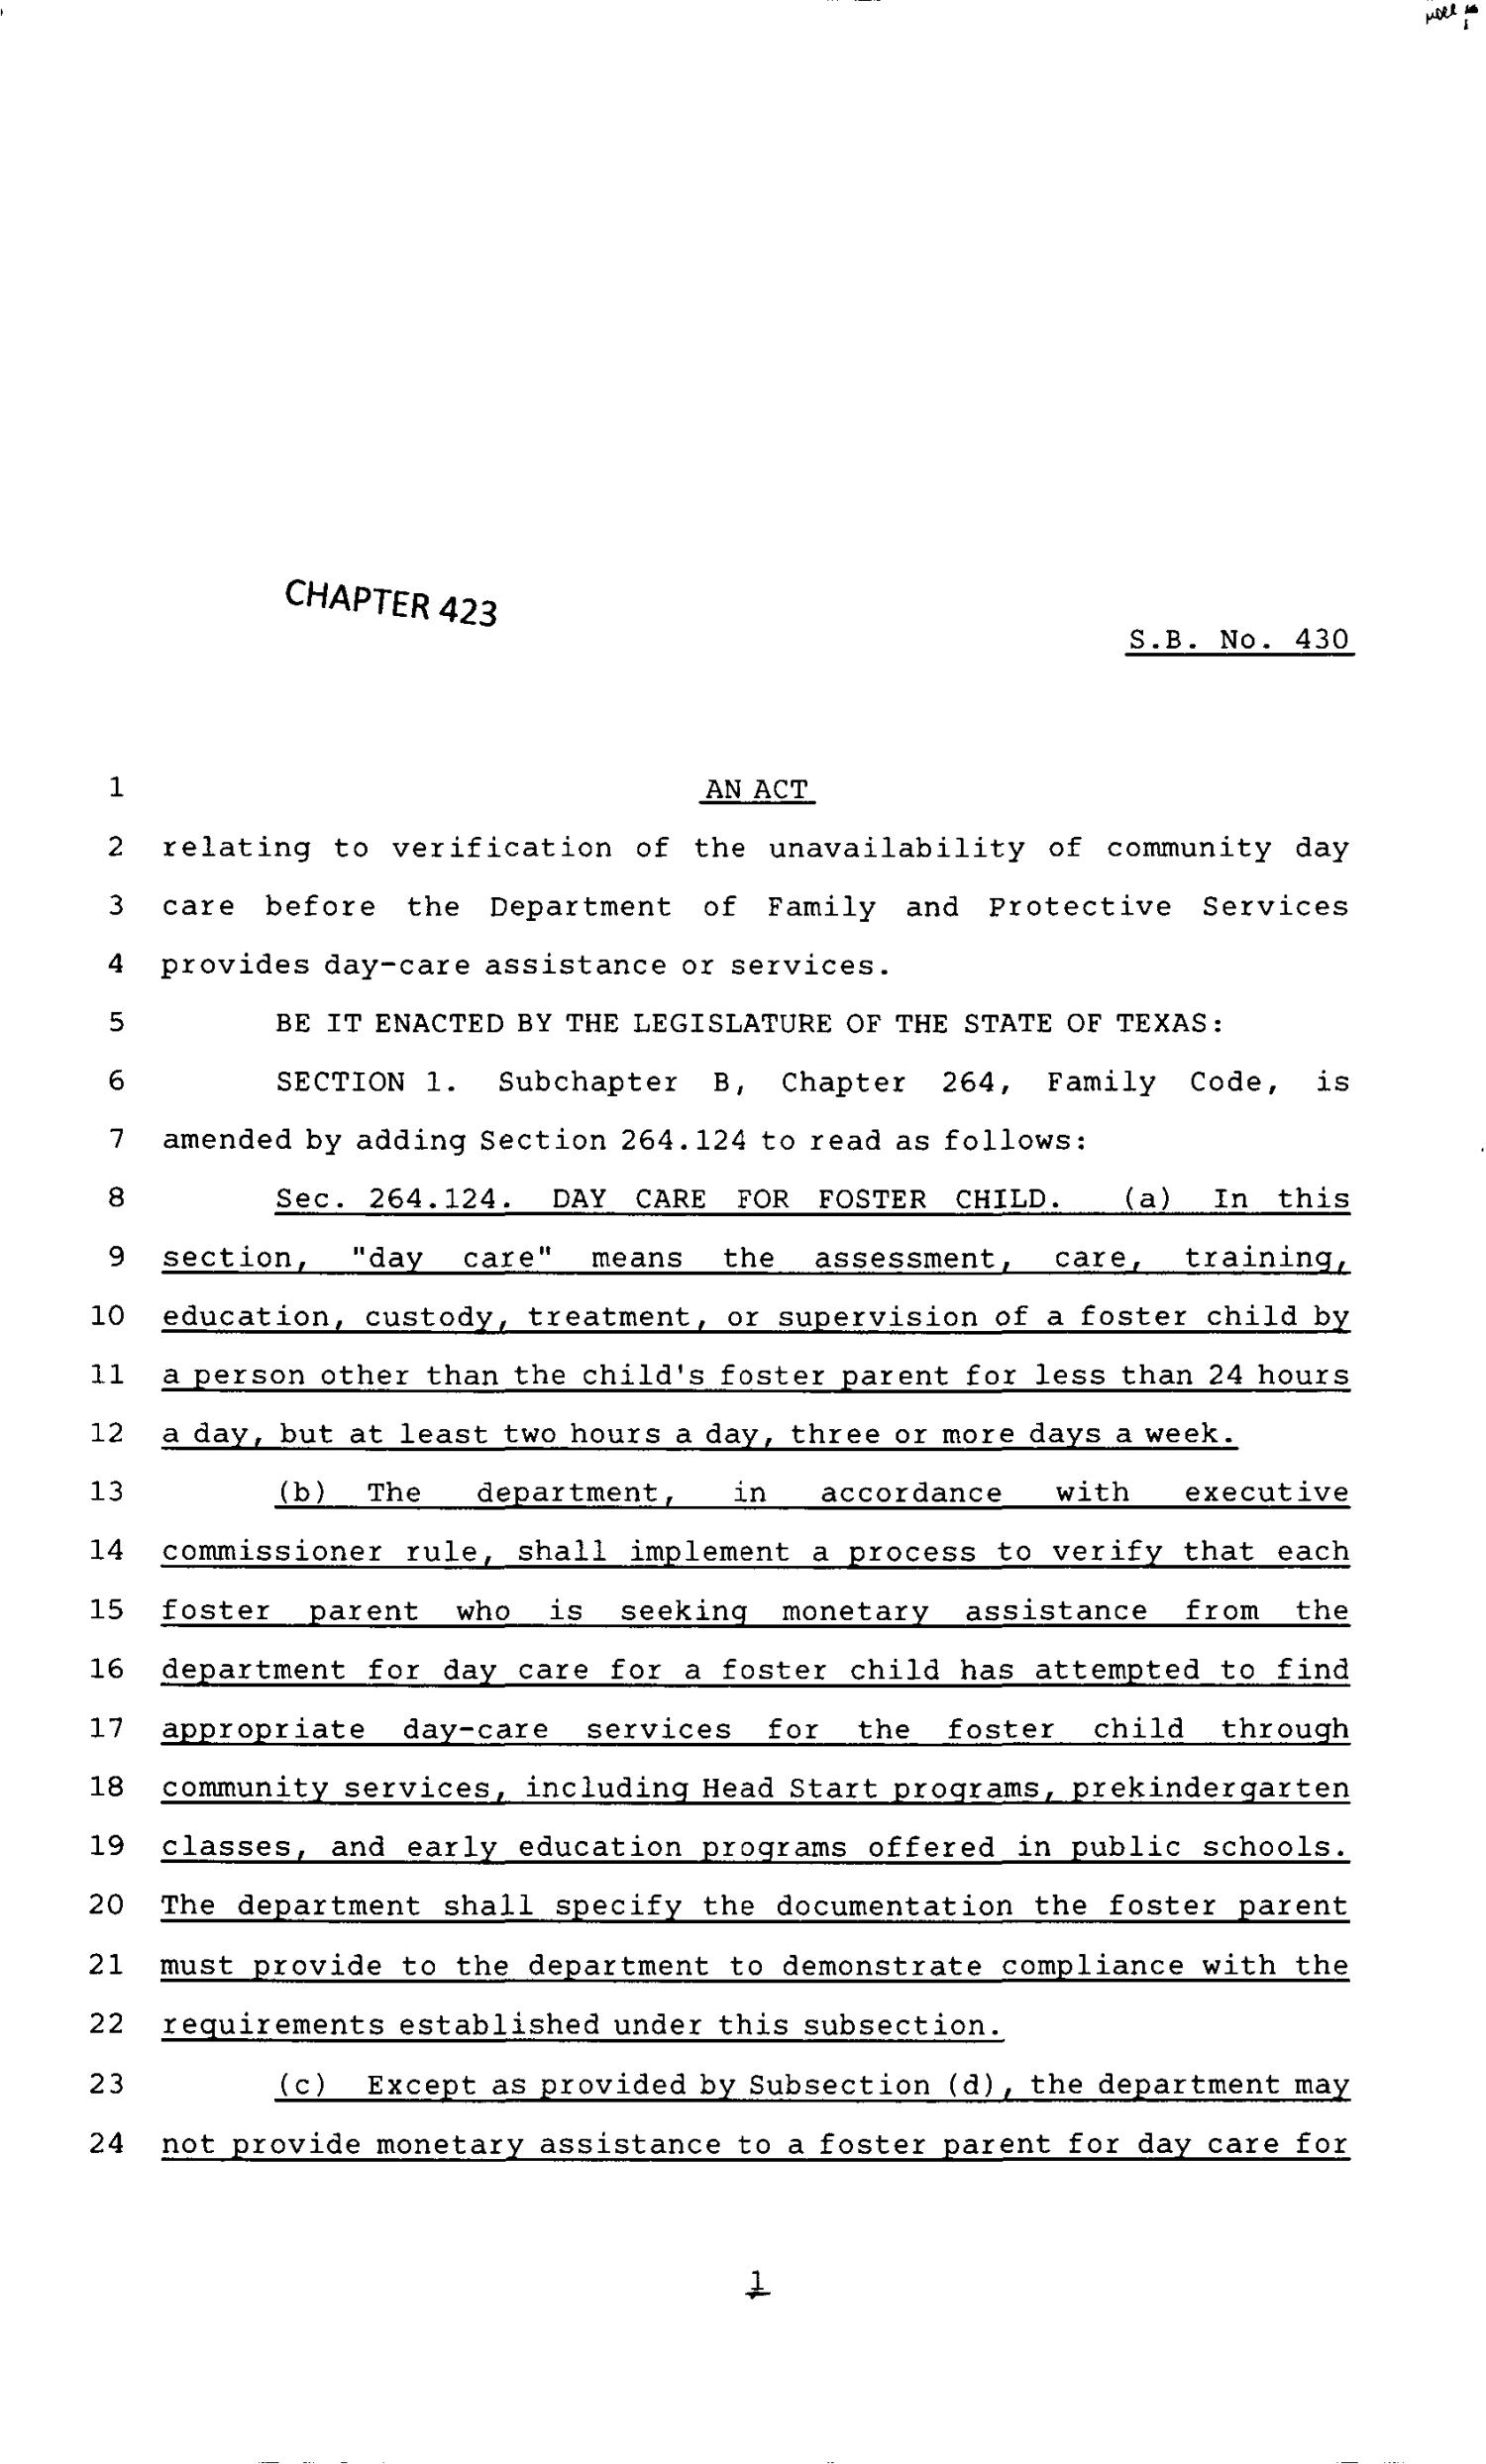 83rd Texas Legislature, Regular Session, Senate Bill 430, Chapter 423
                                                
                                                    [Sequence #]: 1 of 2
                                                